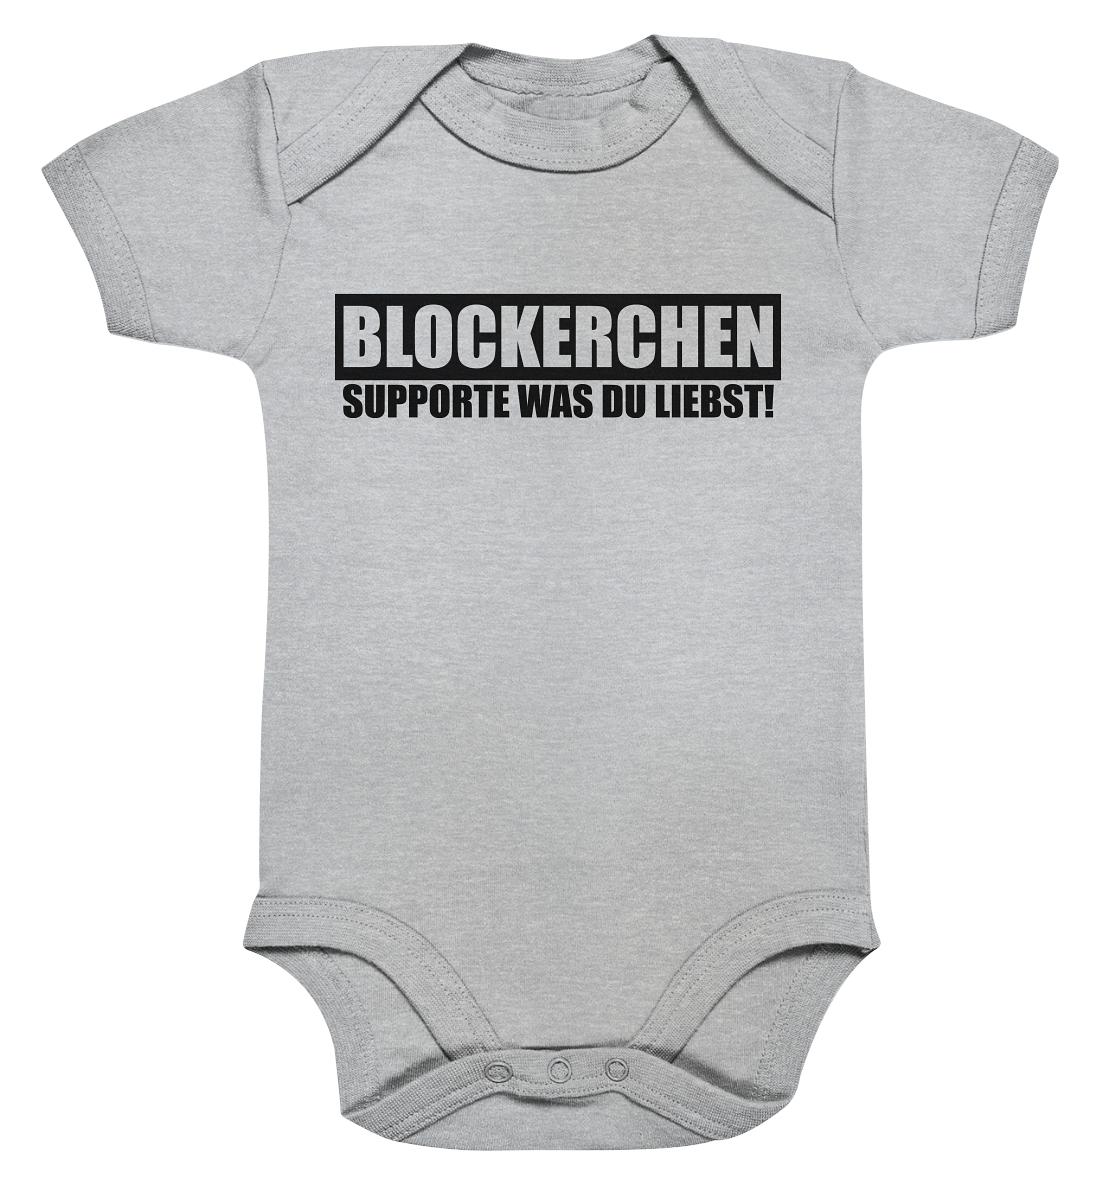 N.O.S.W. BLOCK Fanblock Body "BLOCKERCHEN" Organic Baby Bodysuite hather grau